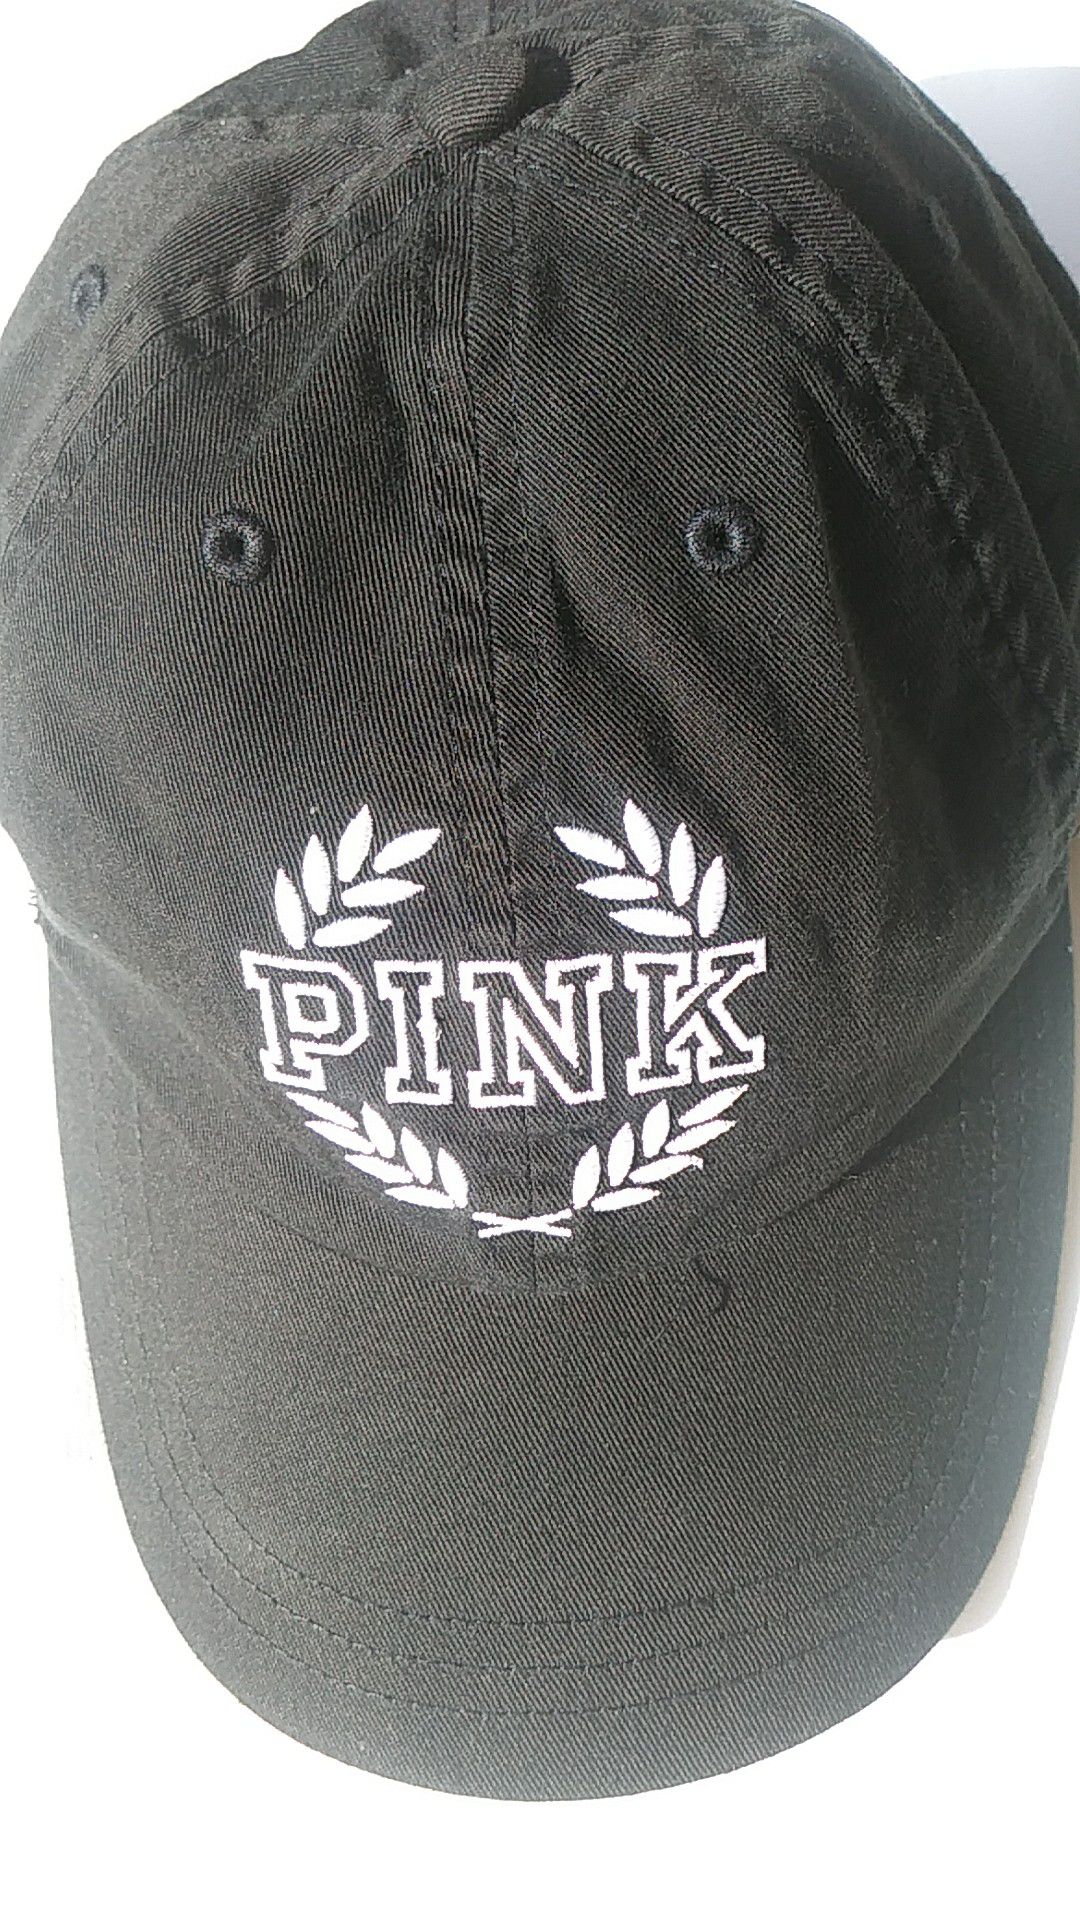 Black white pink hat